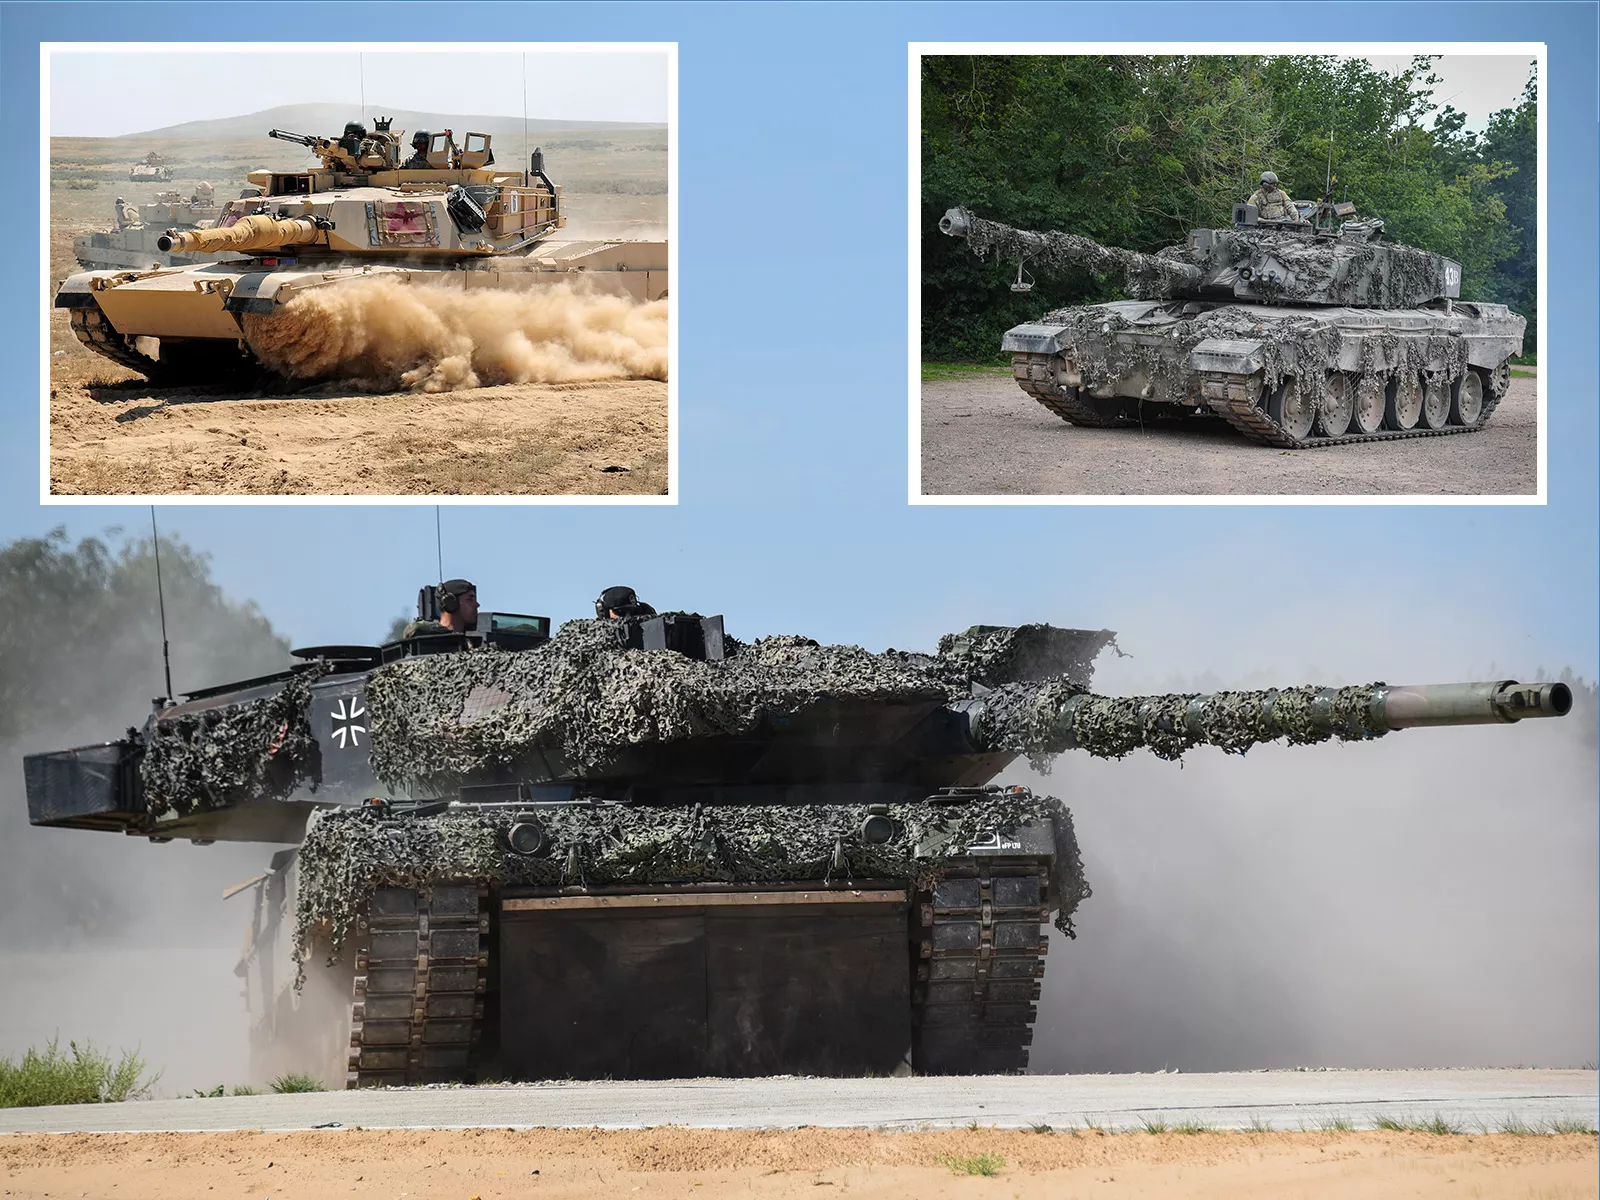 https://d.newsweek.com/en/full/2185421/comp-image-tanks-being-sent-ukraine.webp